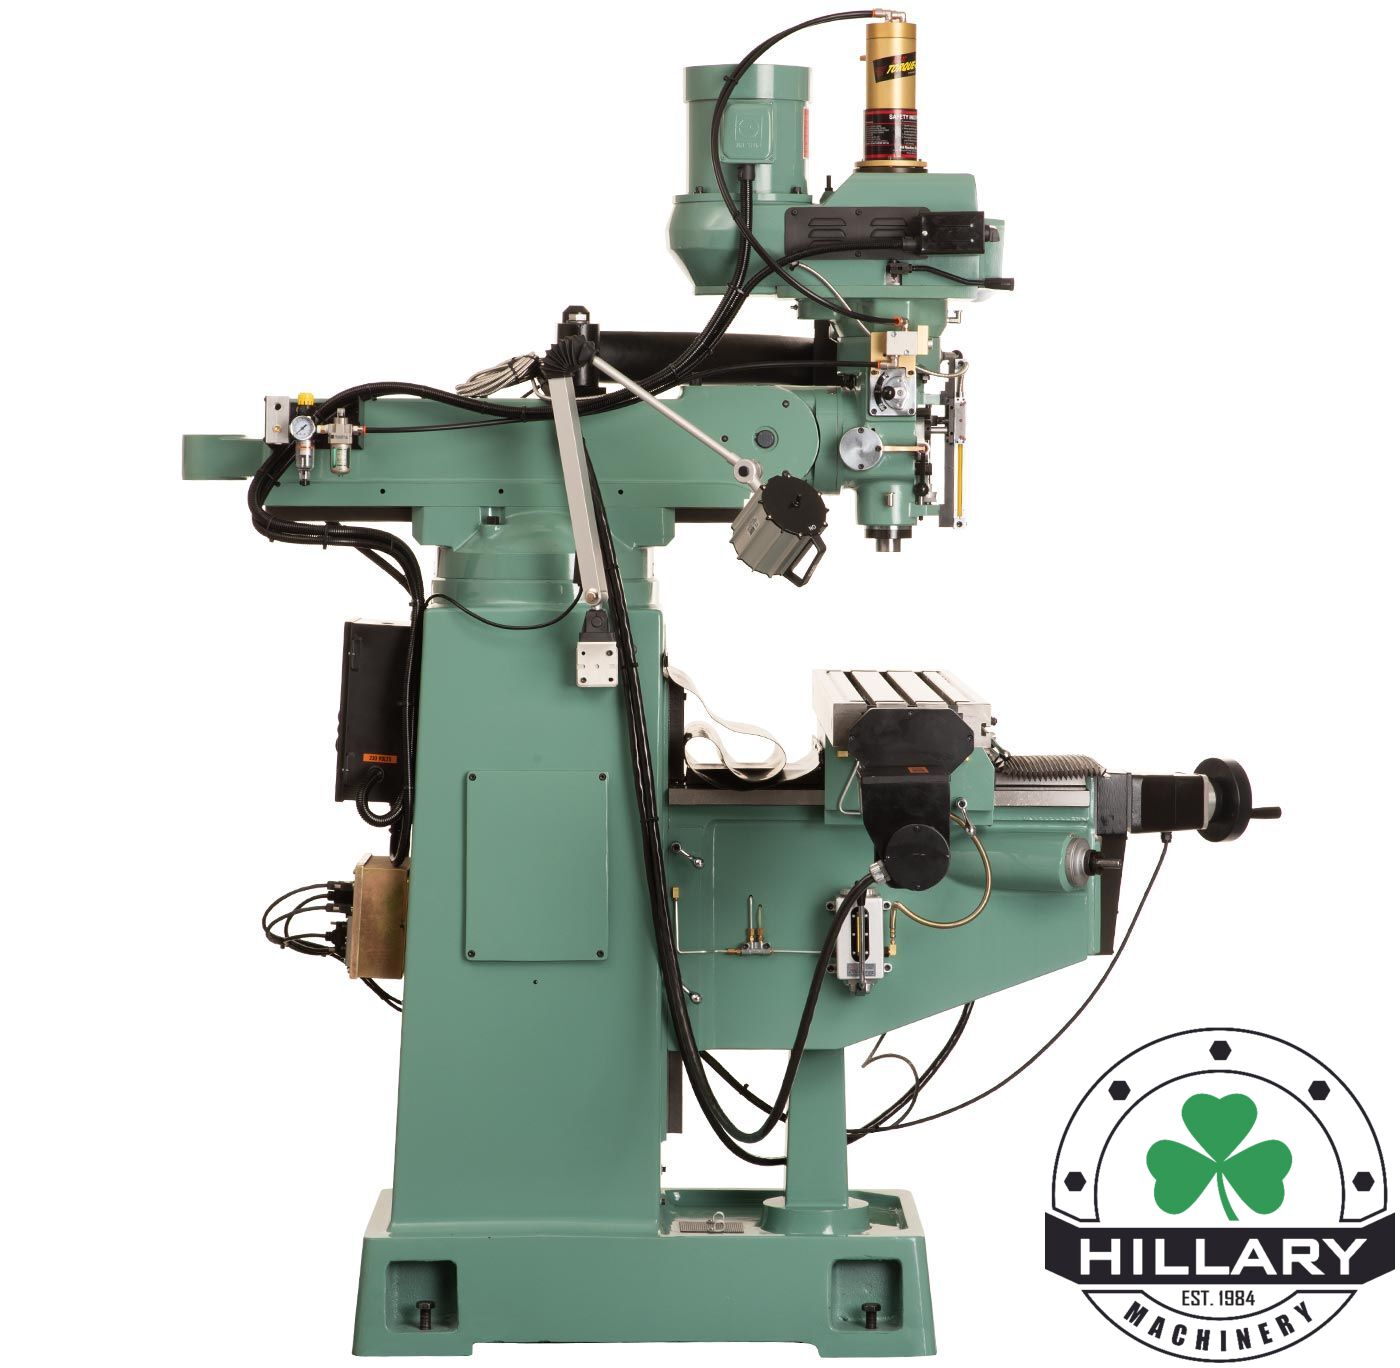 SOUTHWESTERN INDUSTRIES TRAK K3 Tool Room Mills | Hillary Machinery